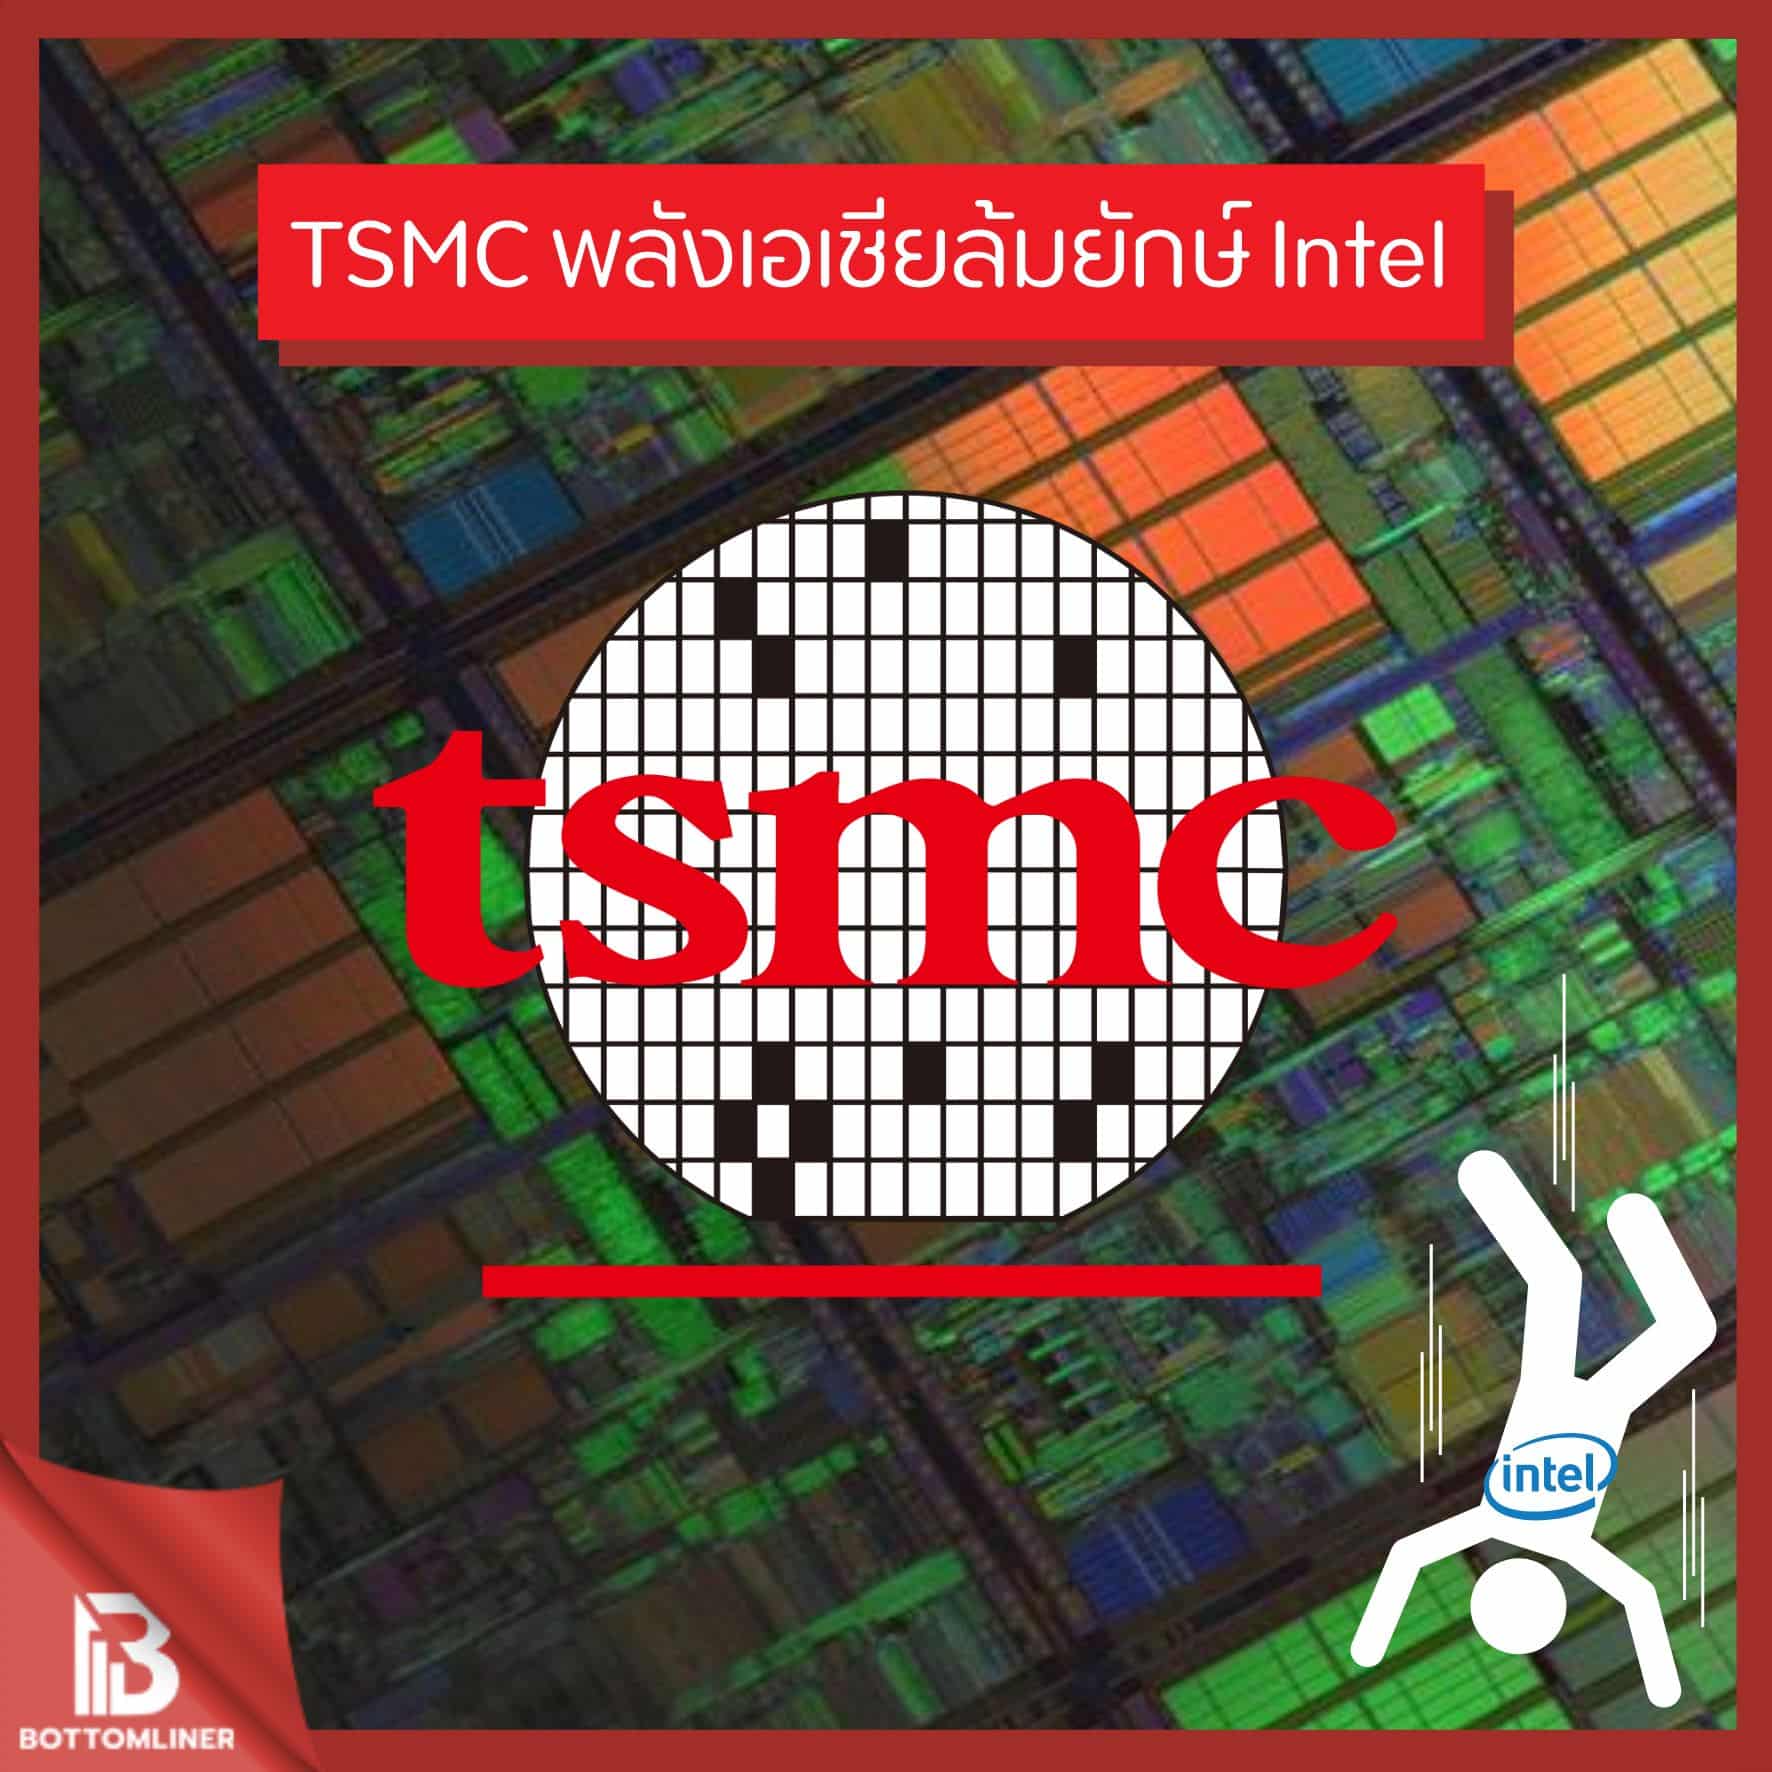 TSMC พลังเอเชียล้มยักษ์ Intel